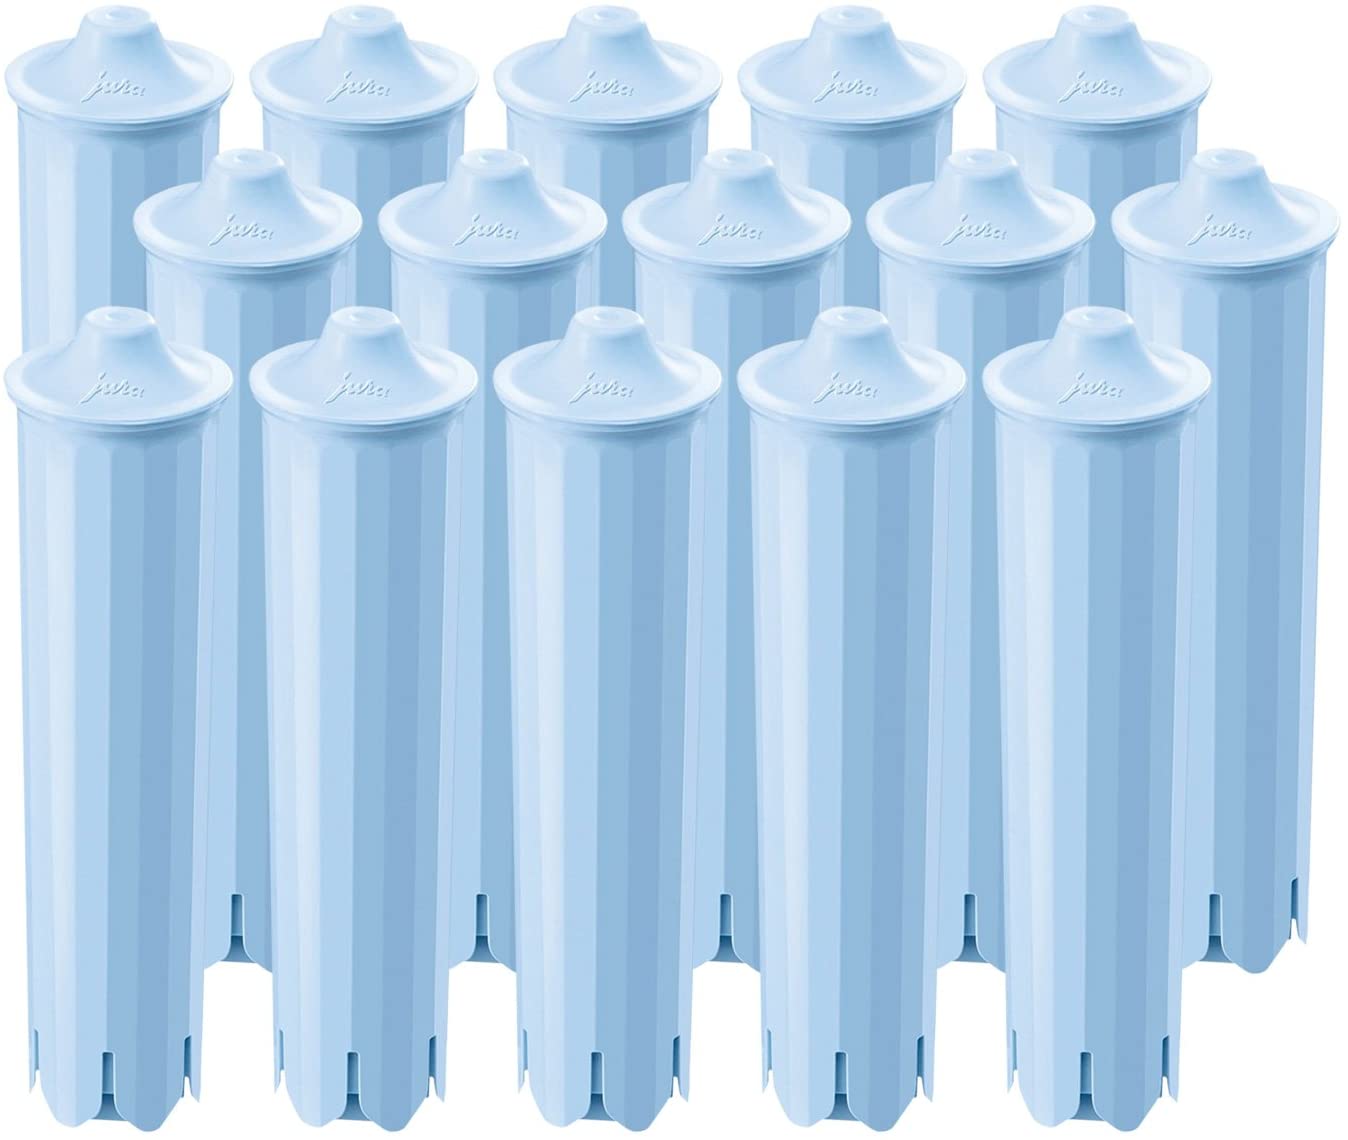 15 JURA CLARIS filter cartridges ENA (Blue)